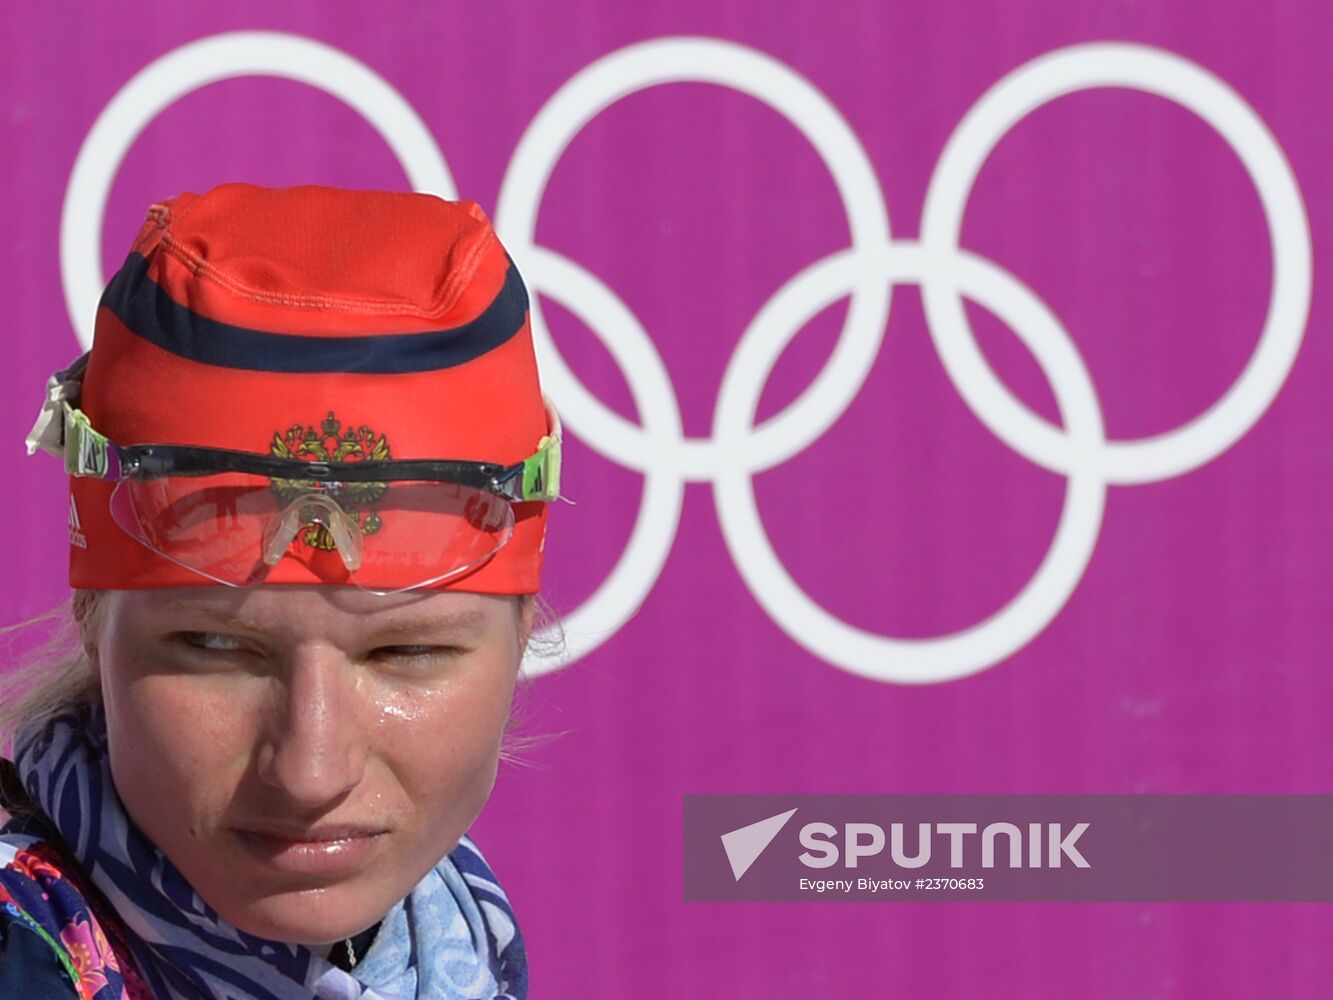 2014 Winter Olympics. Cross-country skiing. Women. Individual race